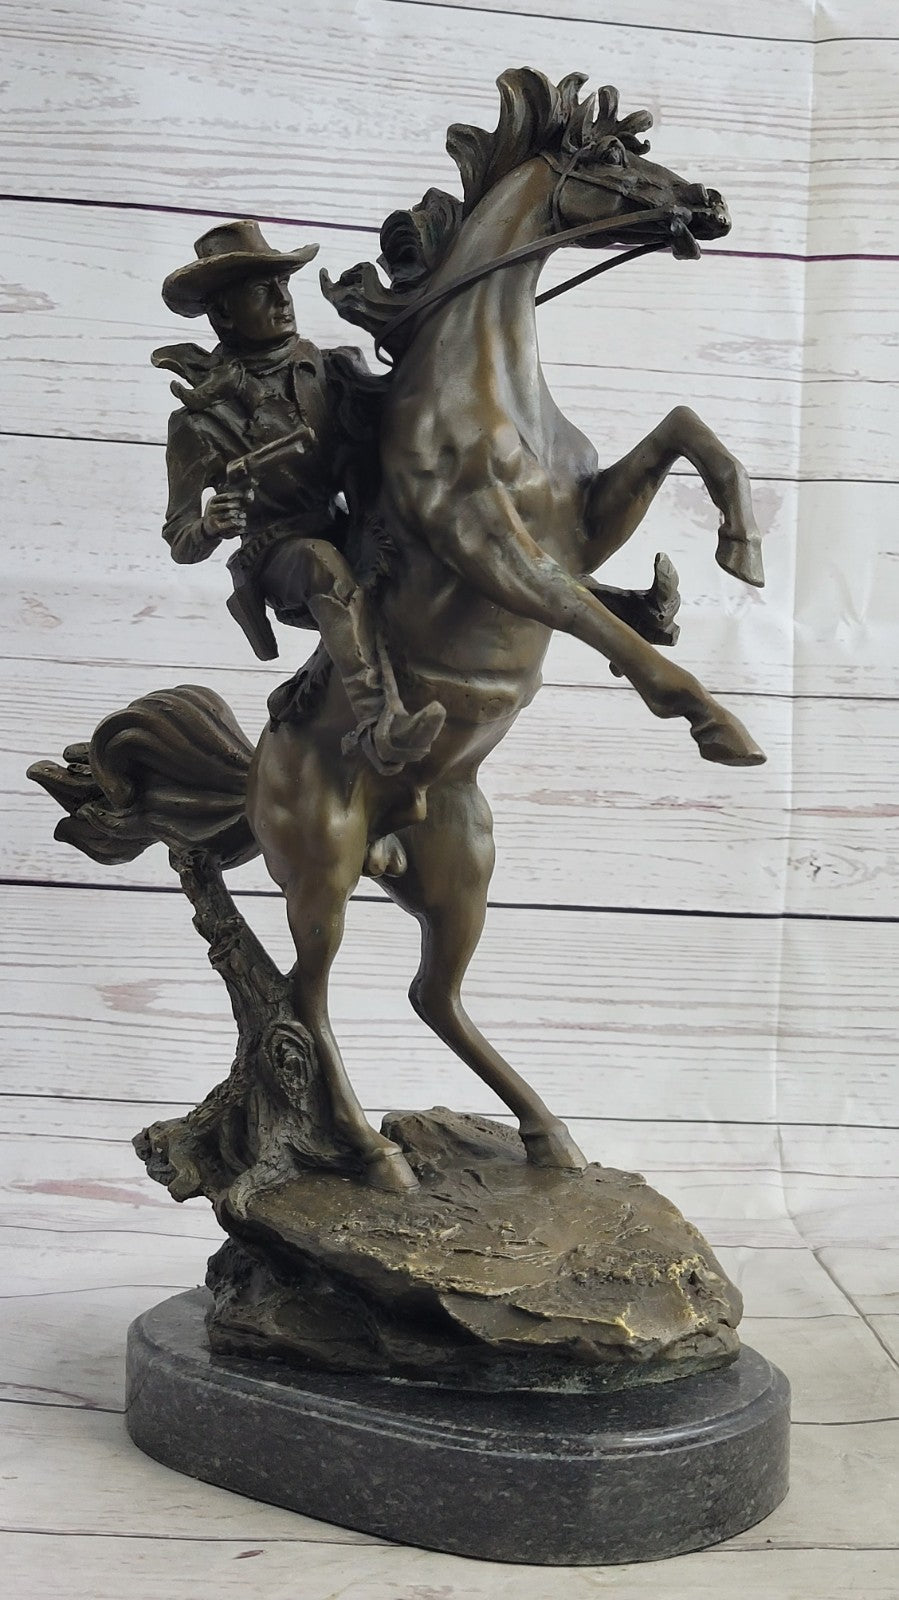 Signed Kamiko Cowboy Riding horse with Gun Bronze Sculpture Figurine Statue